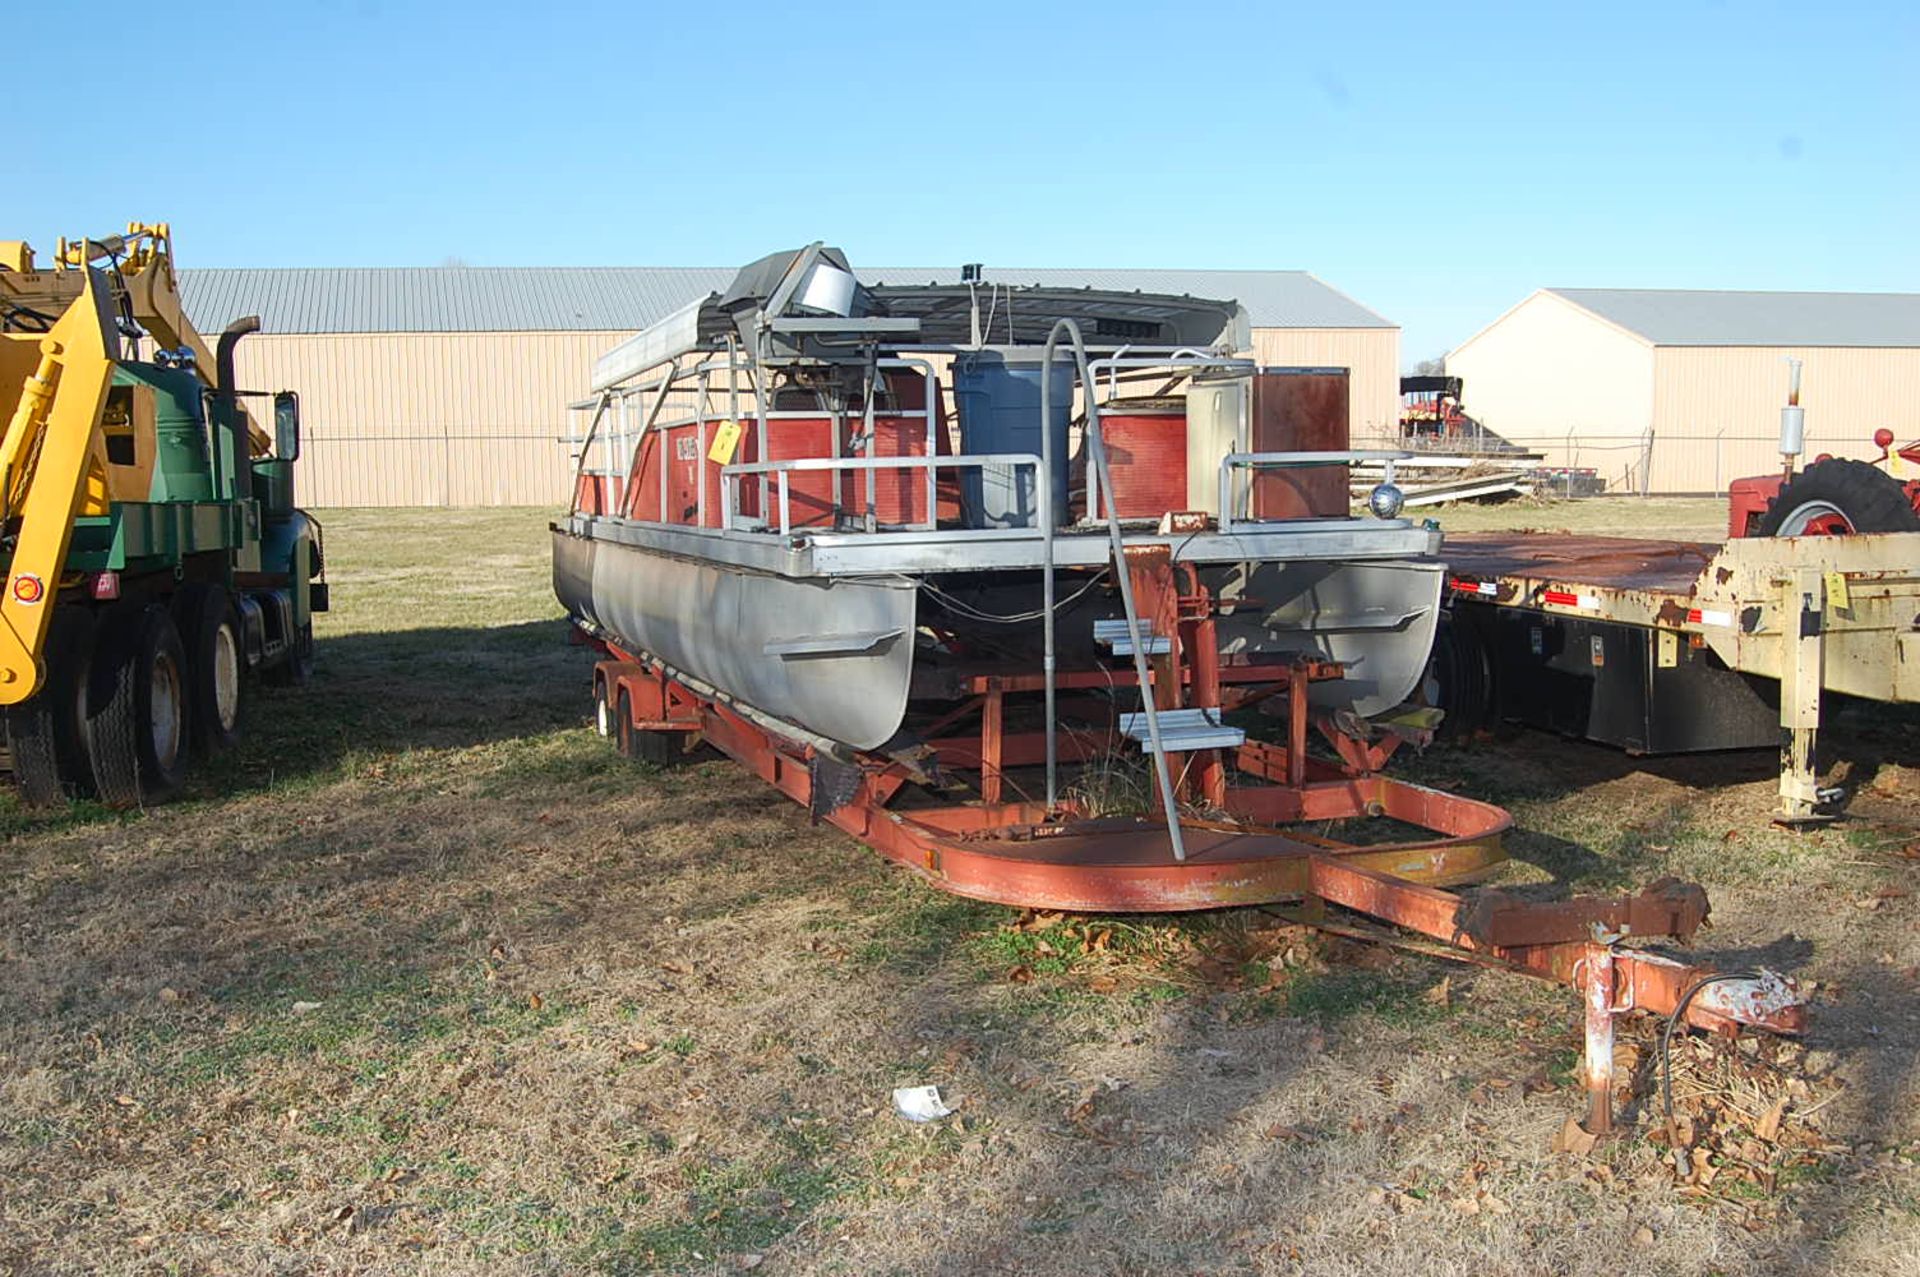 Harris Pontoon Boat, 20 ft. Length, Foam Filled Float Boat Pontoon Includes Mercruiser HP 120/140 - Image 2 of 4